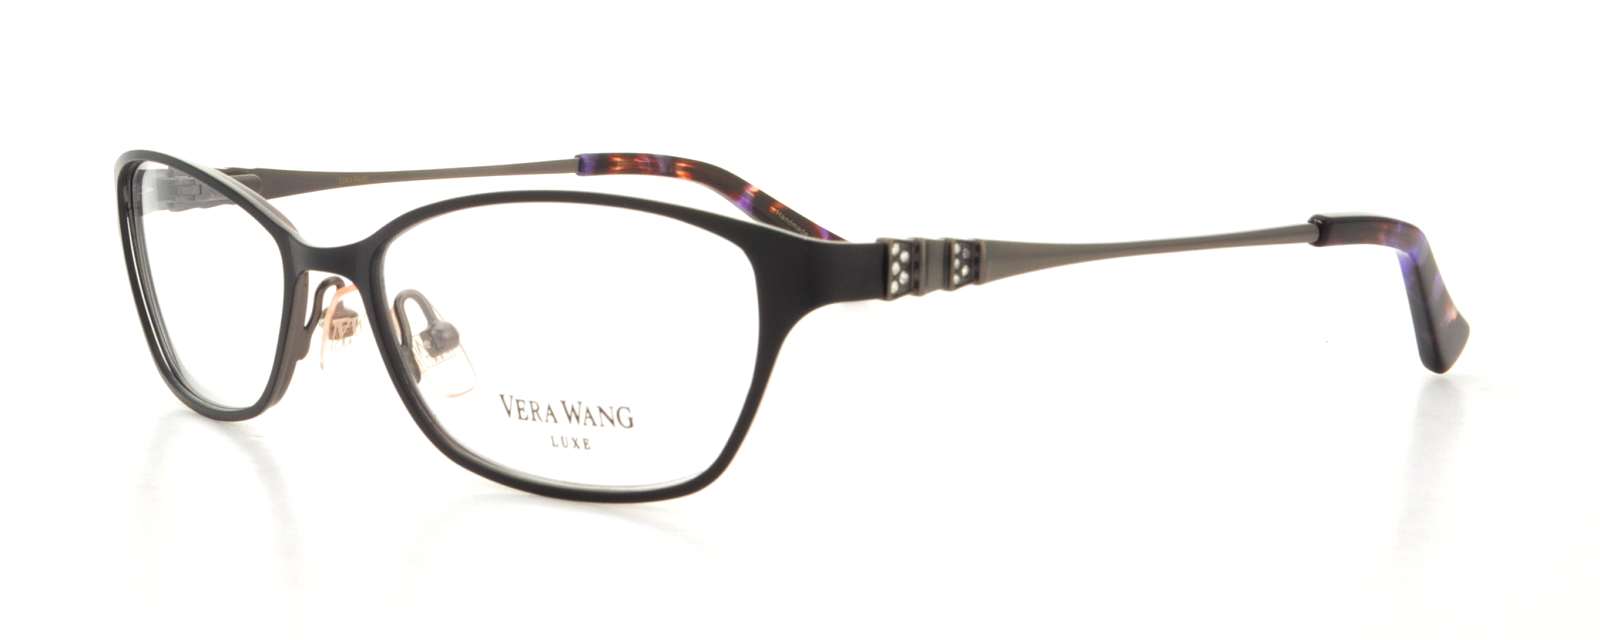 Picture of Vera Wang Eyeglasses EUROPA